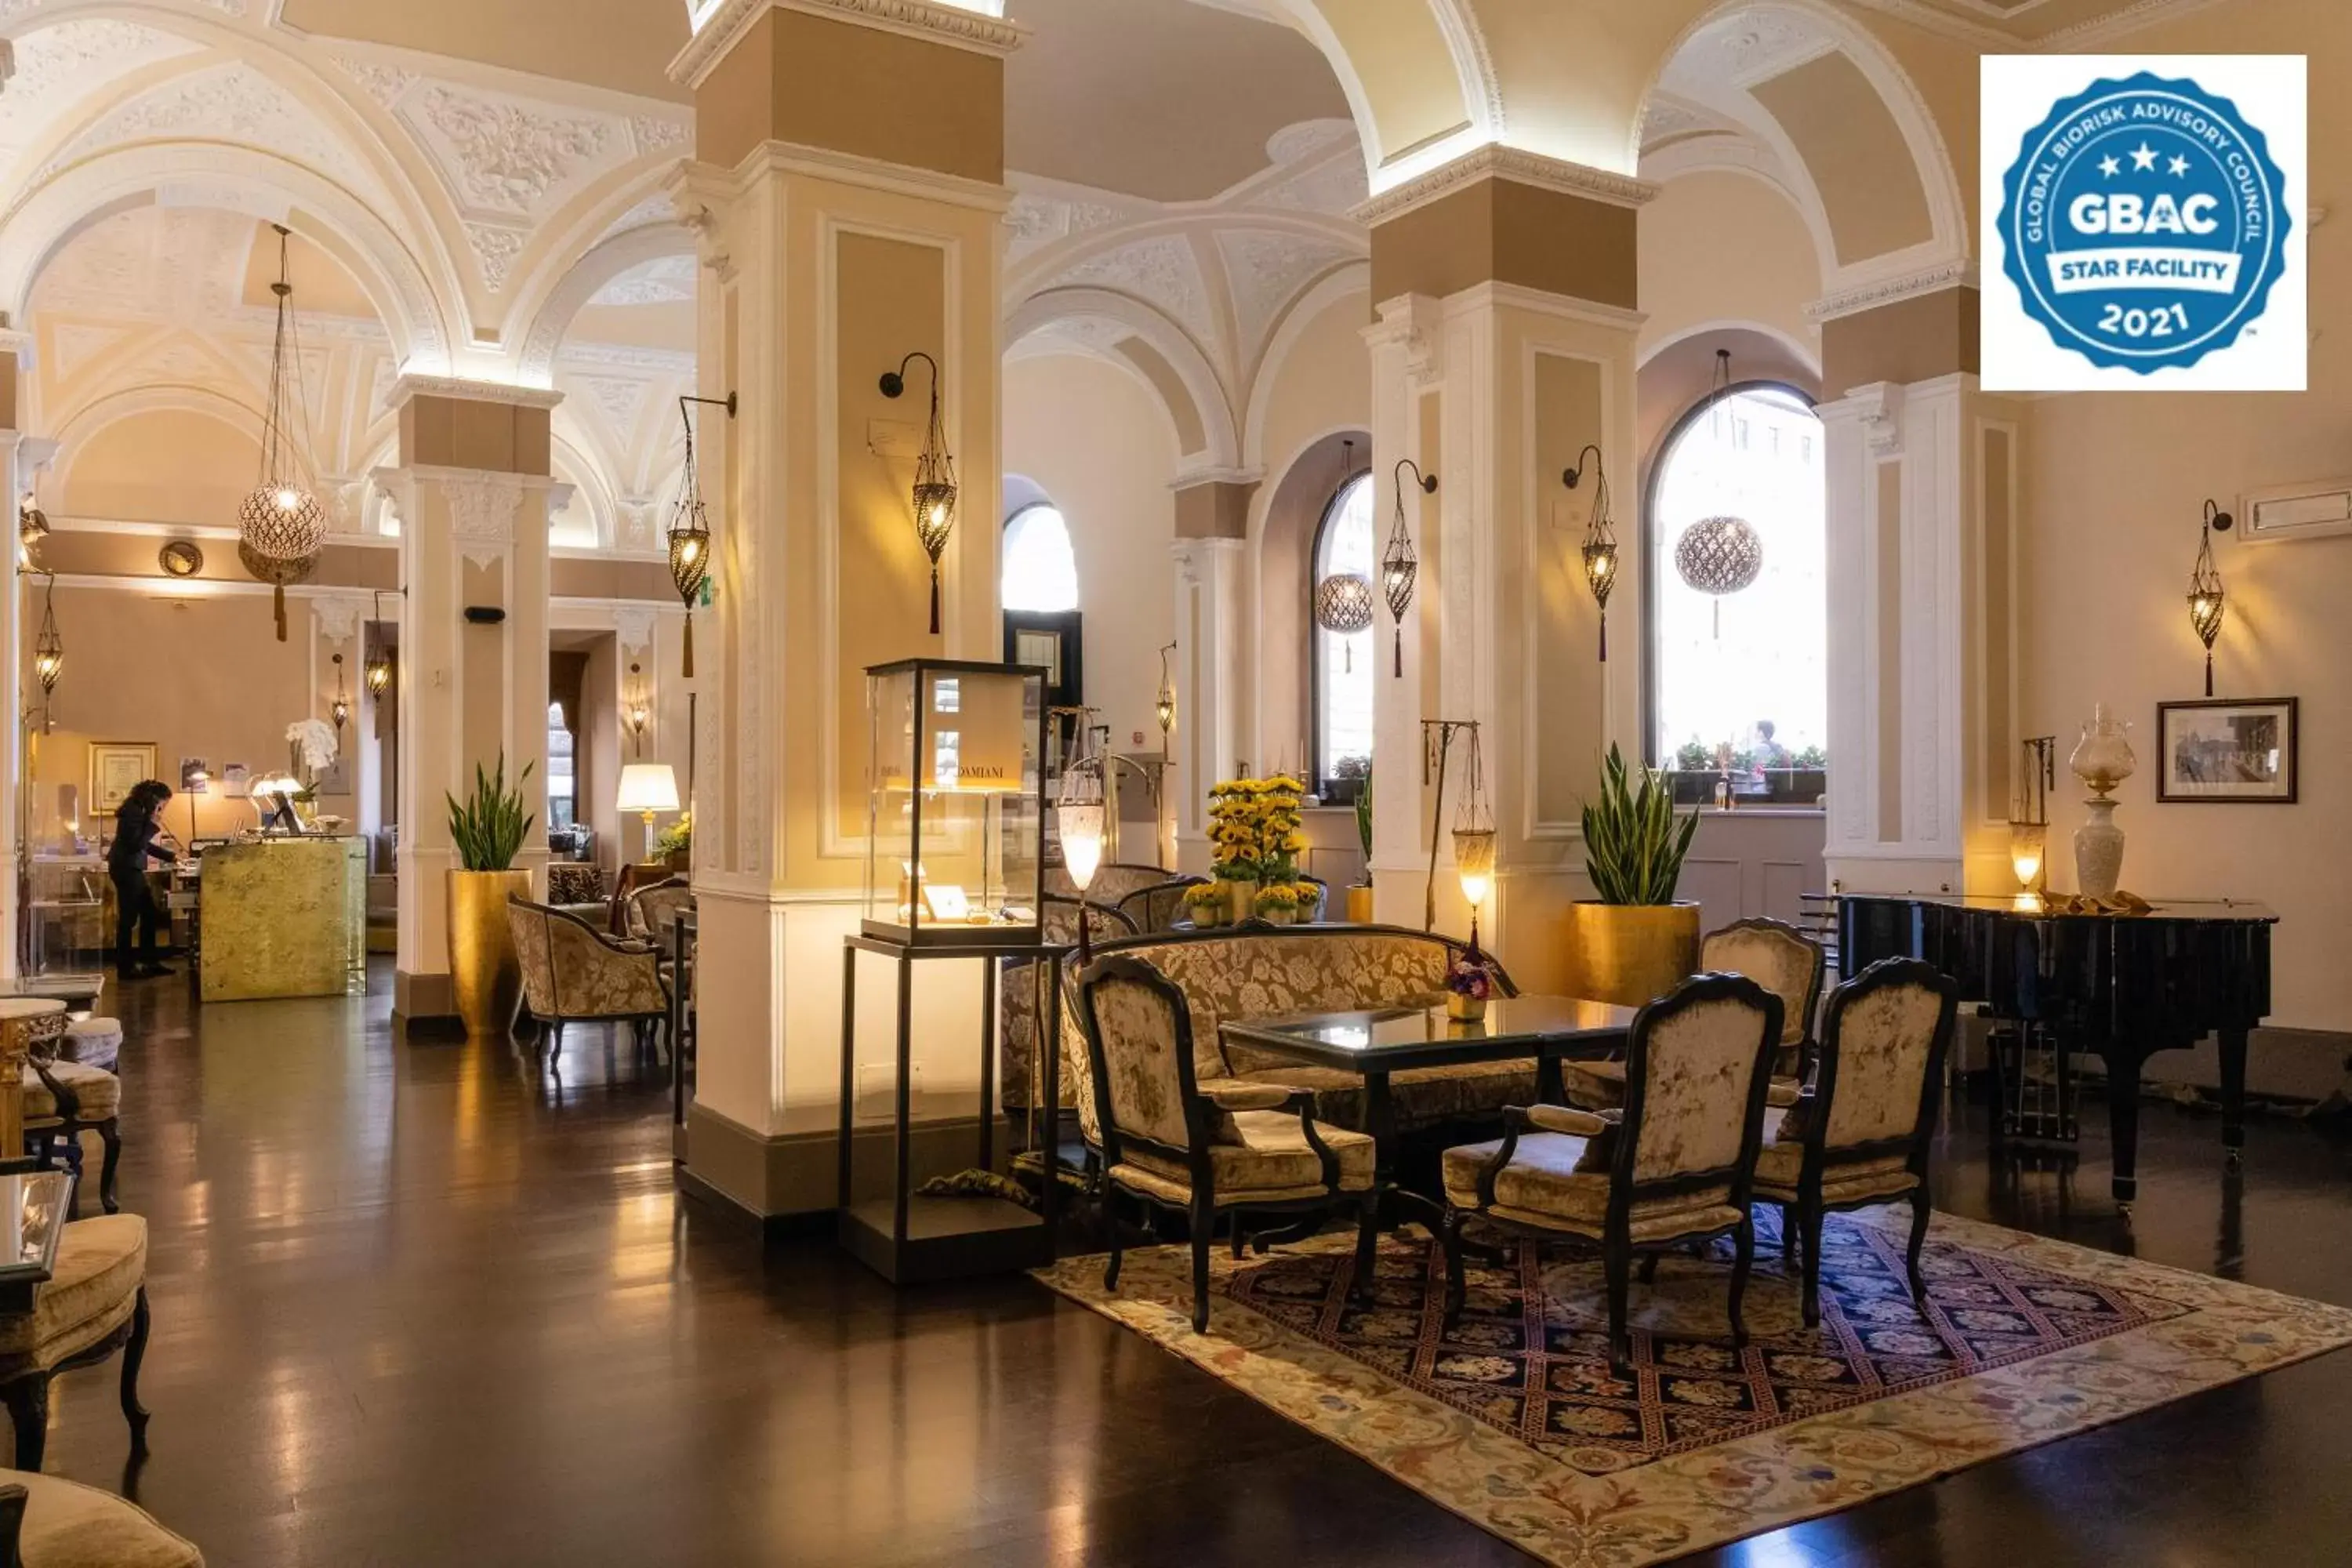 Lobby or reception in Hotel Bernini Palace